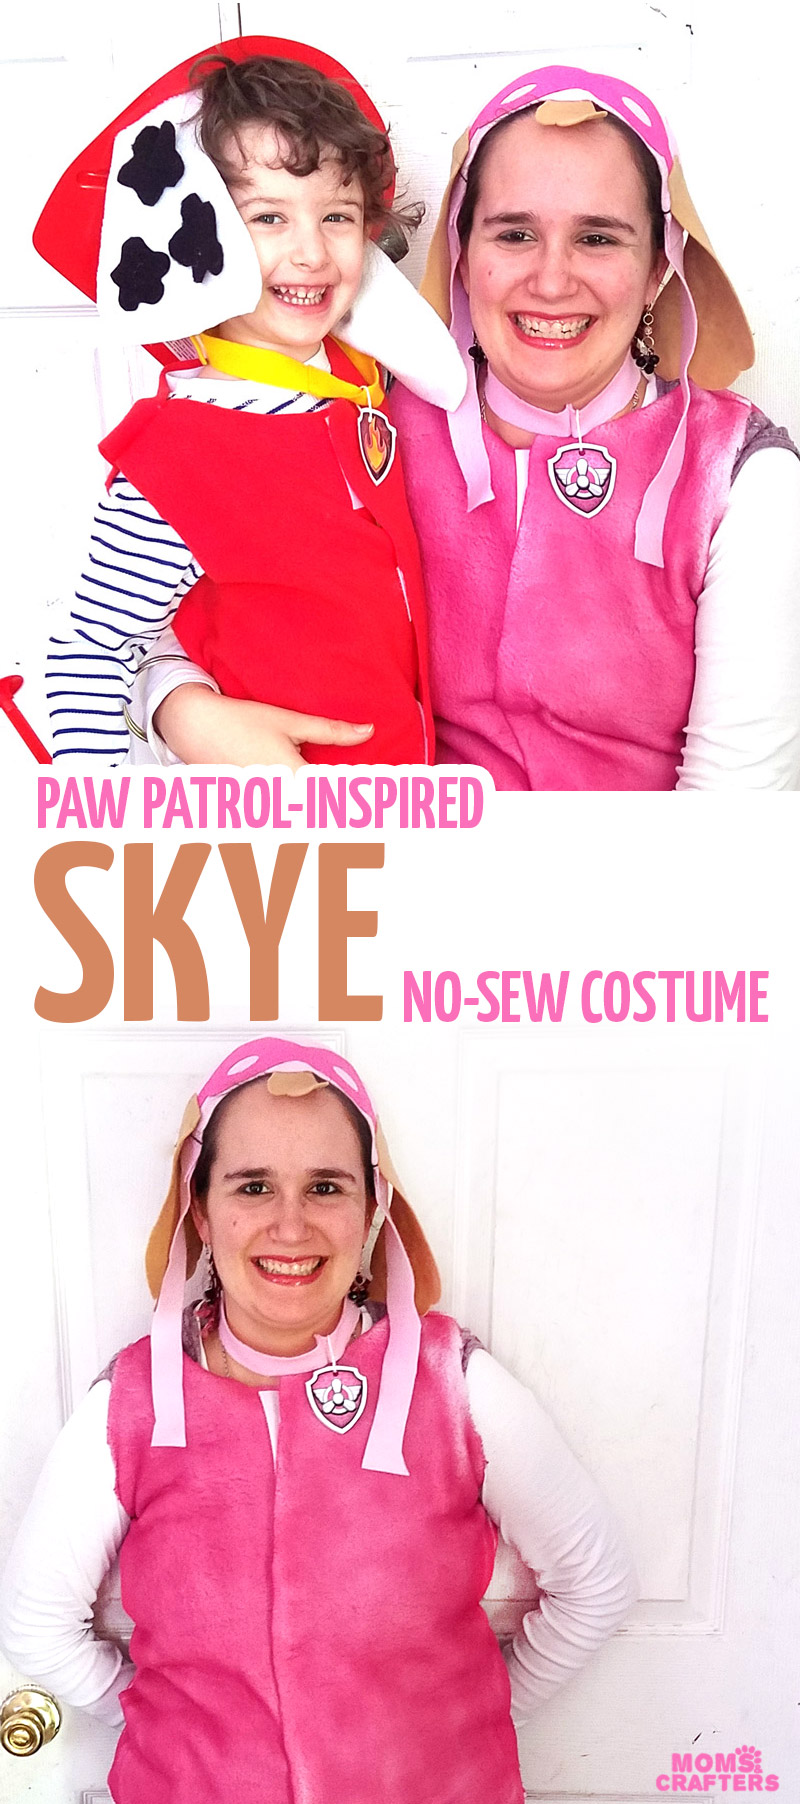 Paw patrol, girl Marshall,  Paw patrol halloween costume, Paw patrol  costume, Skye paw patrol costume